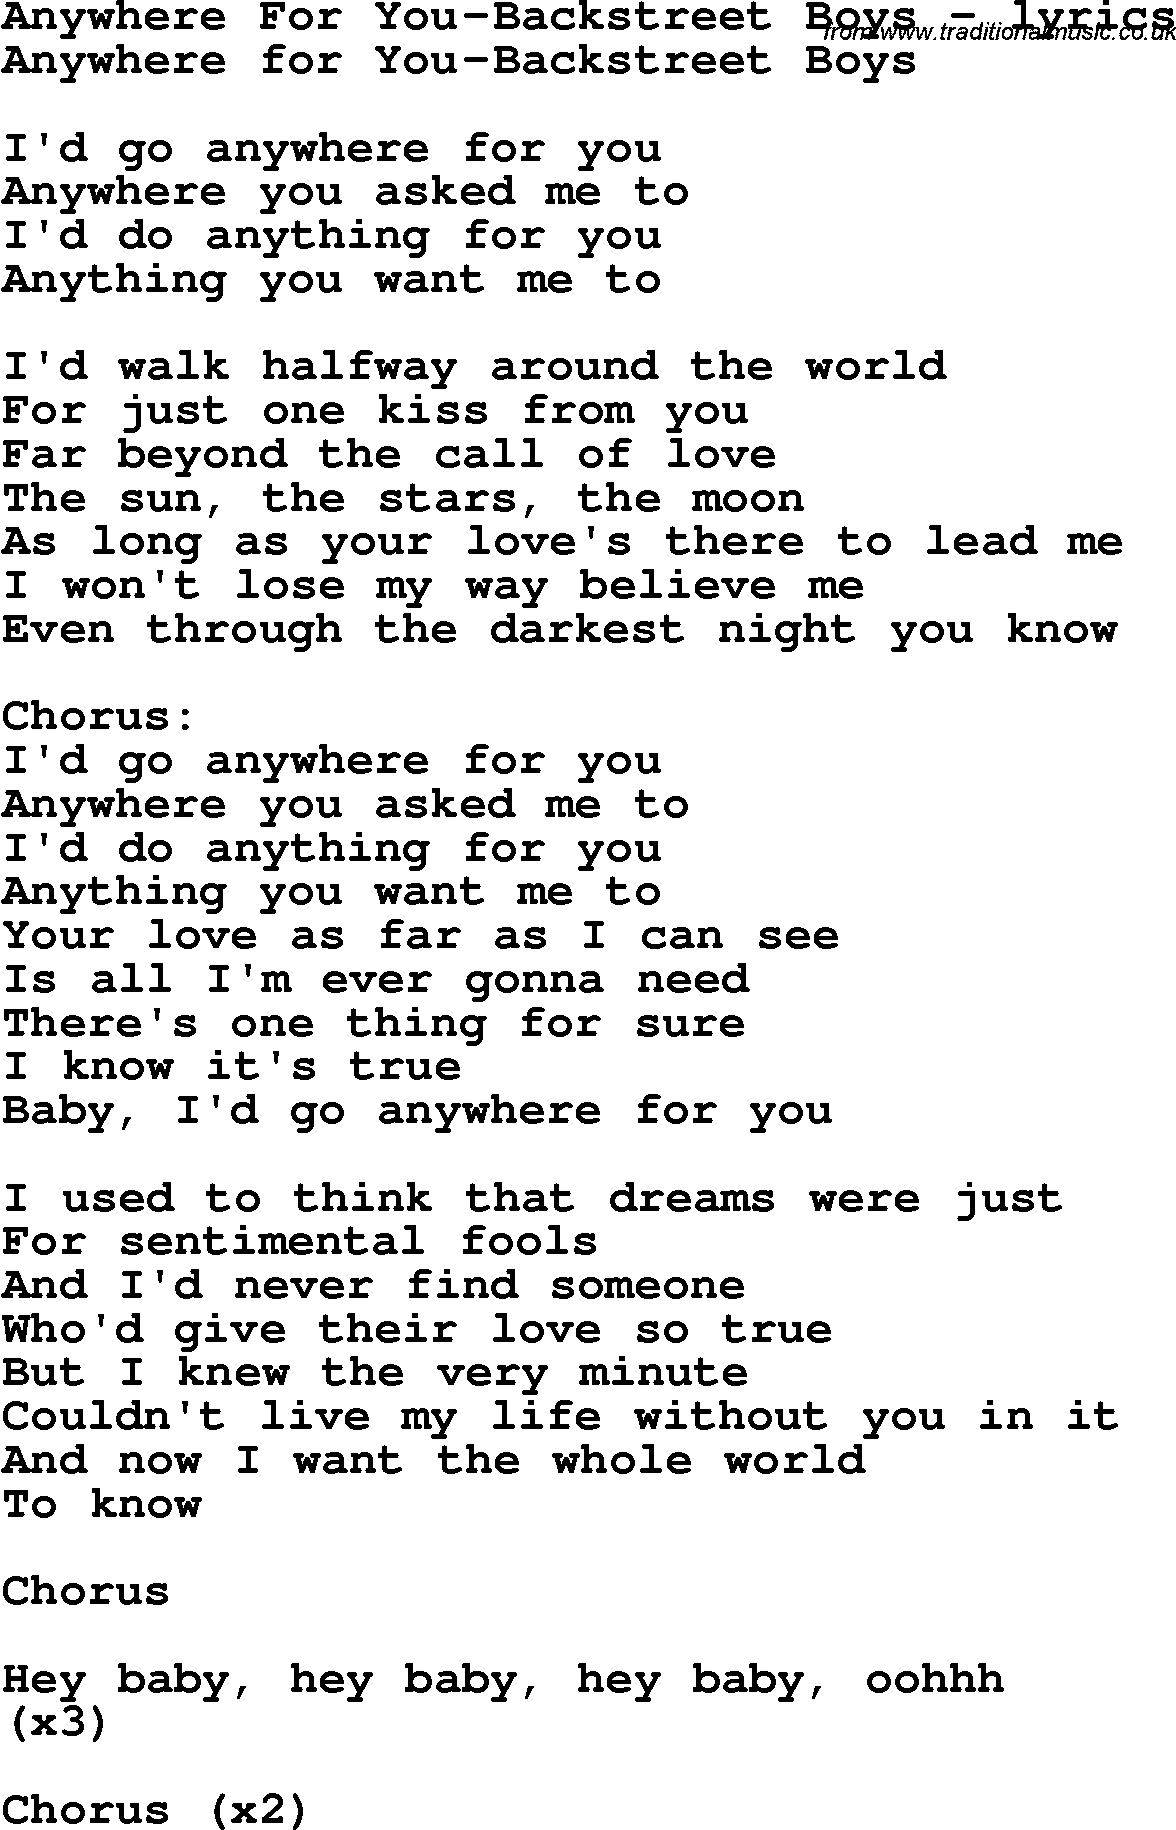 Love Song Lyrics for: Anywhere For You-Backstreet Boys